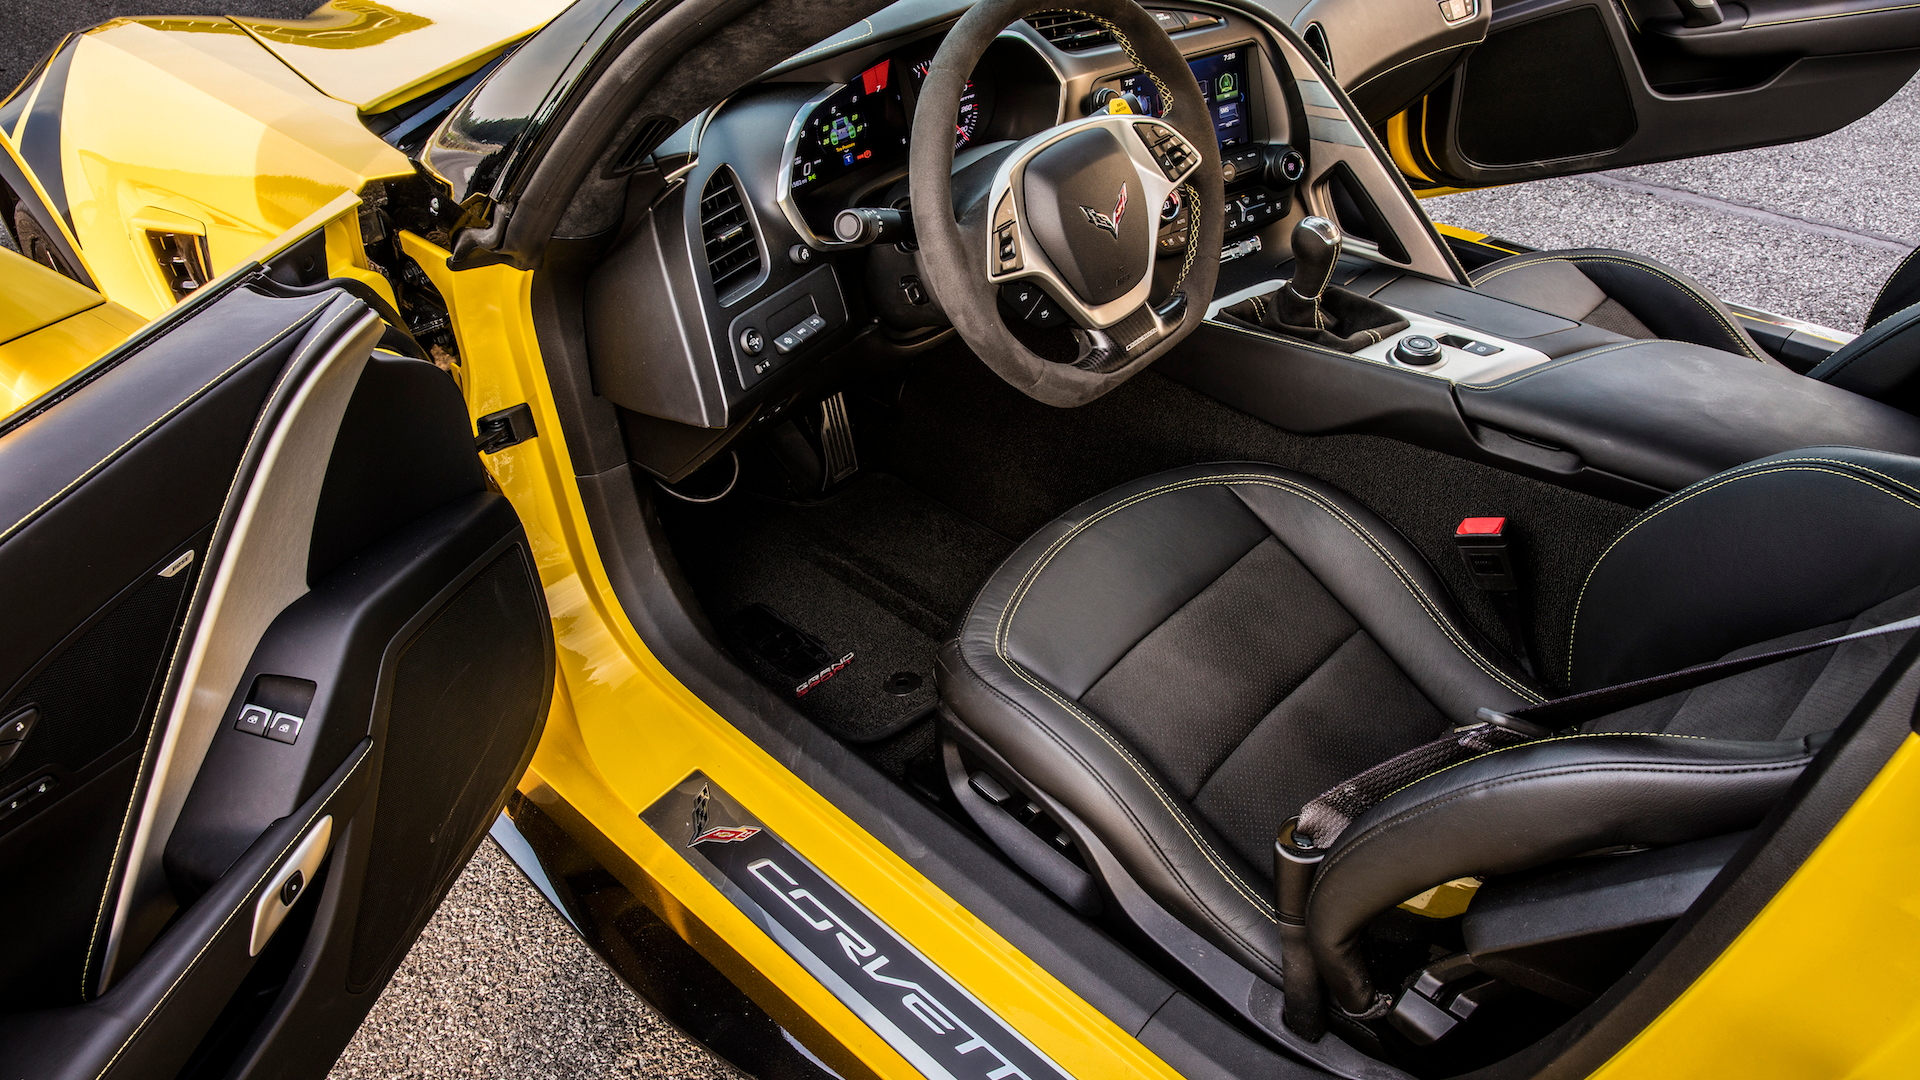 2017 Chevrolet Corvette Grand Sport, yellow